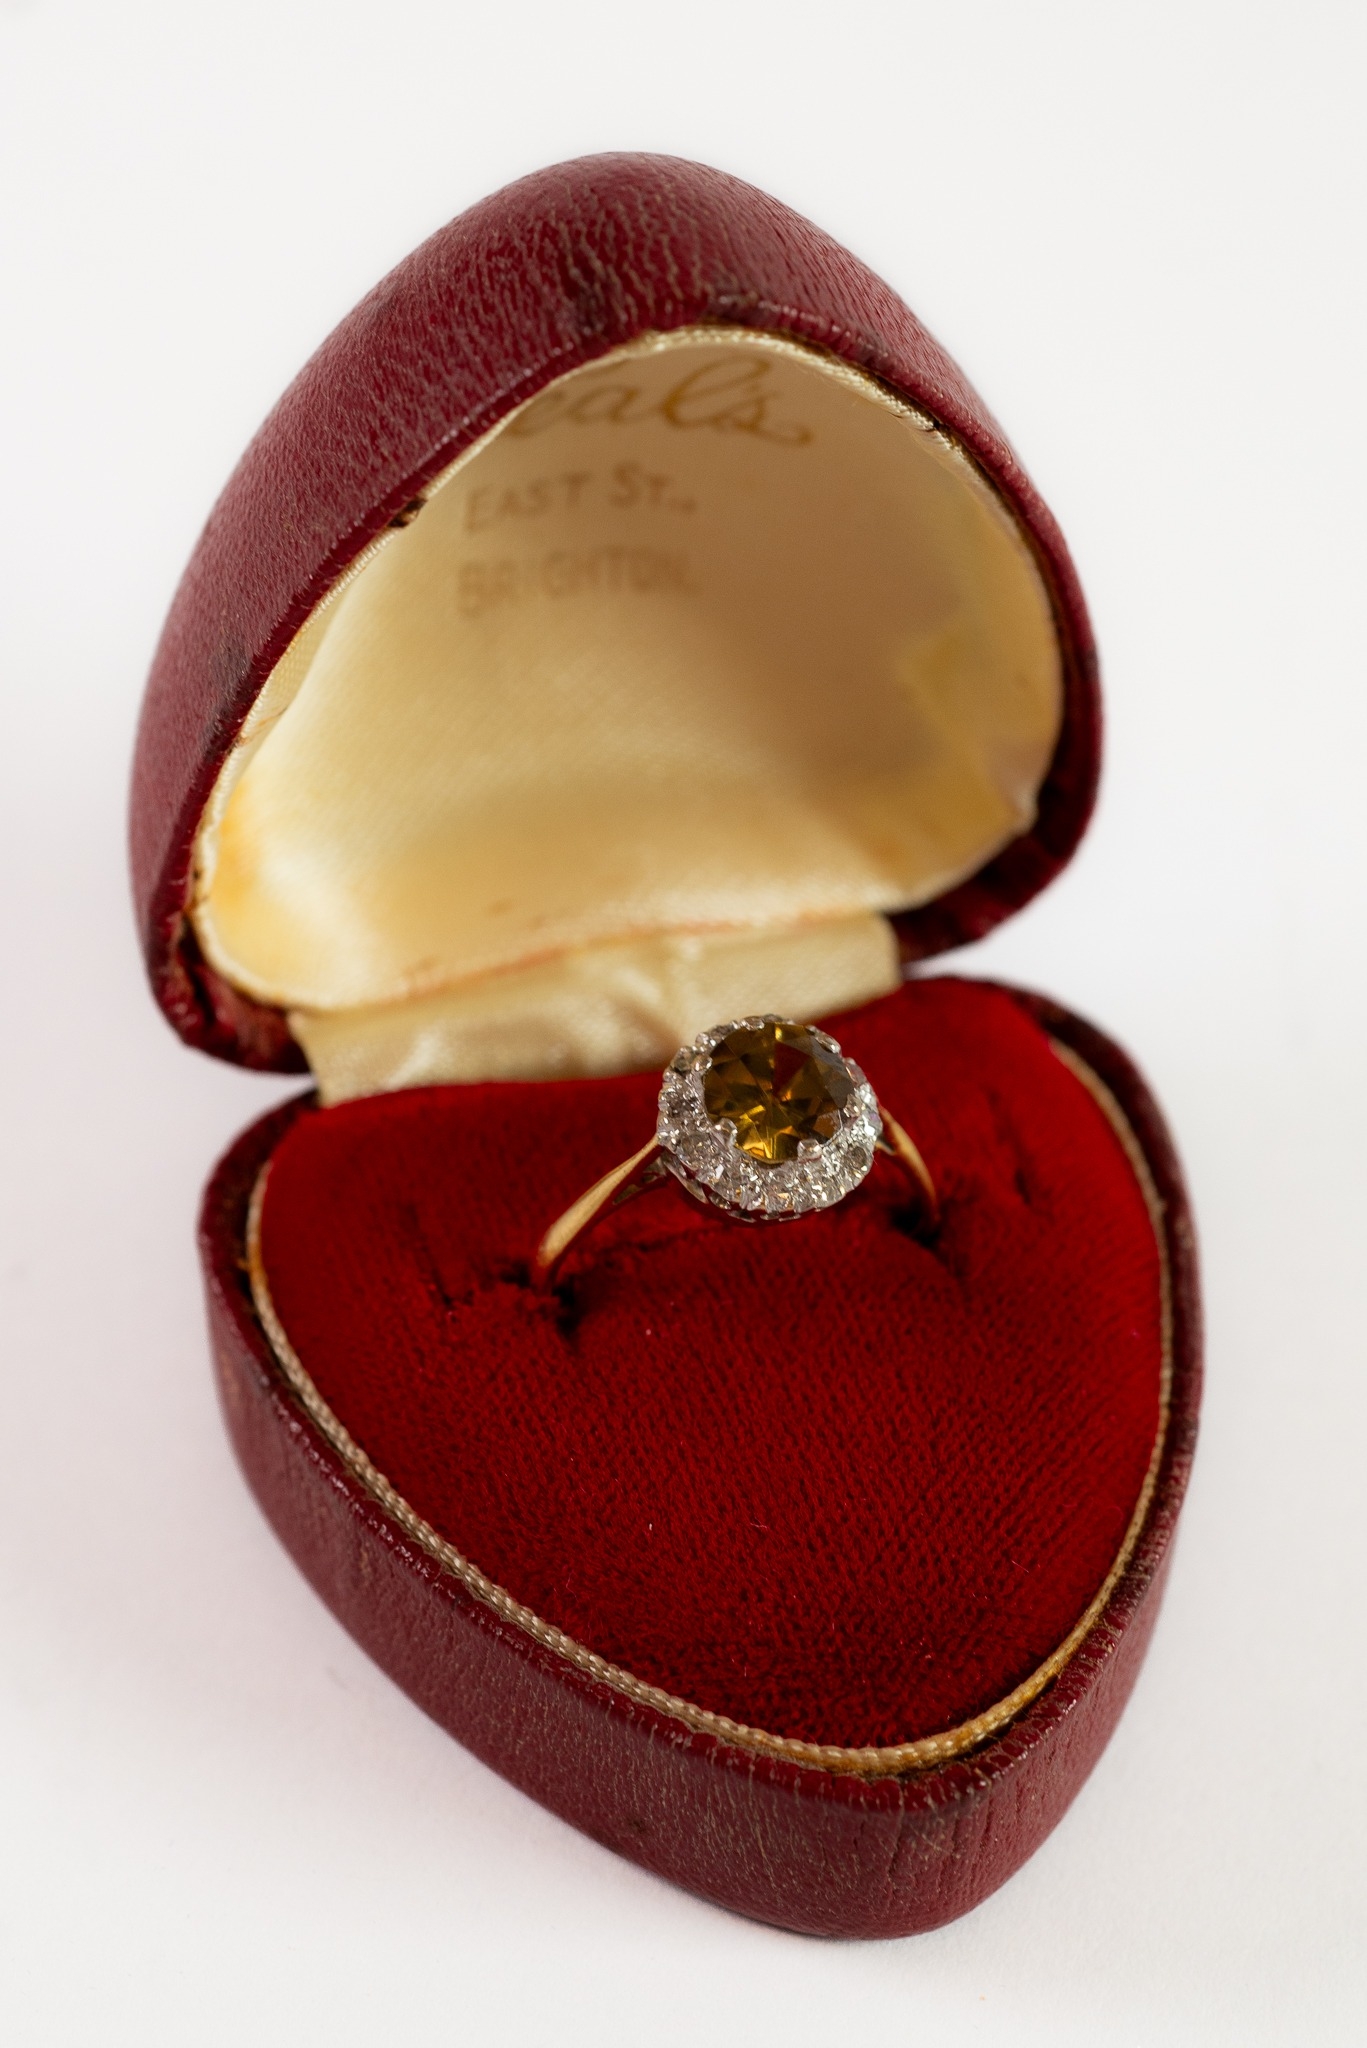 GOLD COLOUR METAL (no carat mark) YELLOW/GREEN STONE SET RING, within a border of TINY DIAMONDS, 2.8